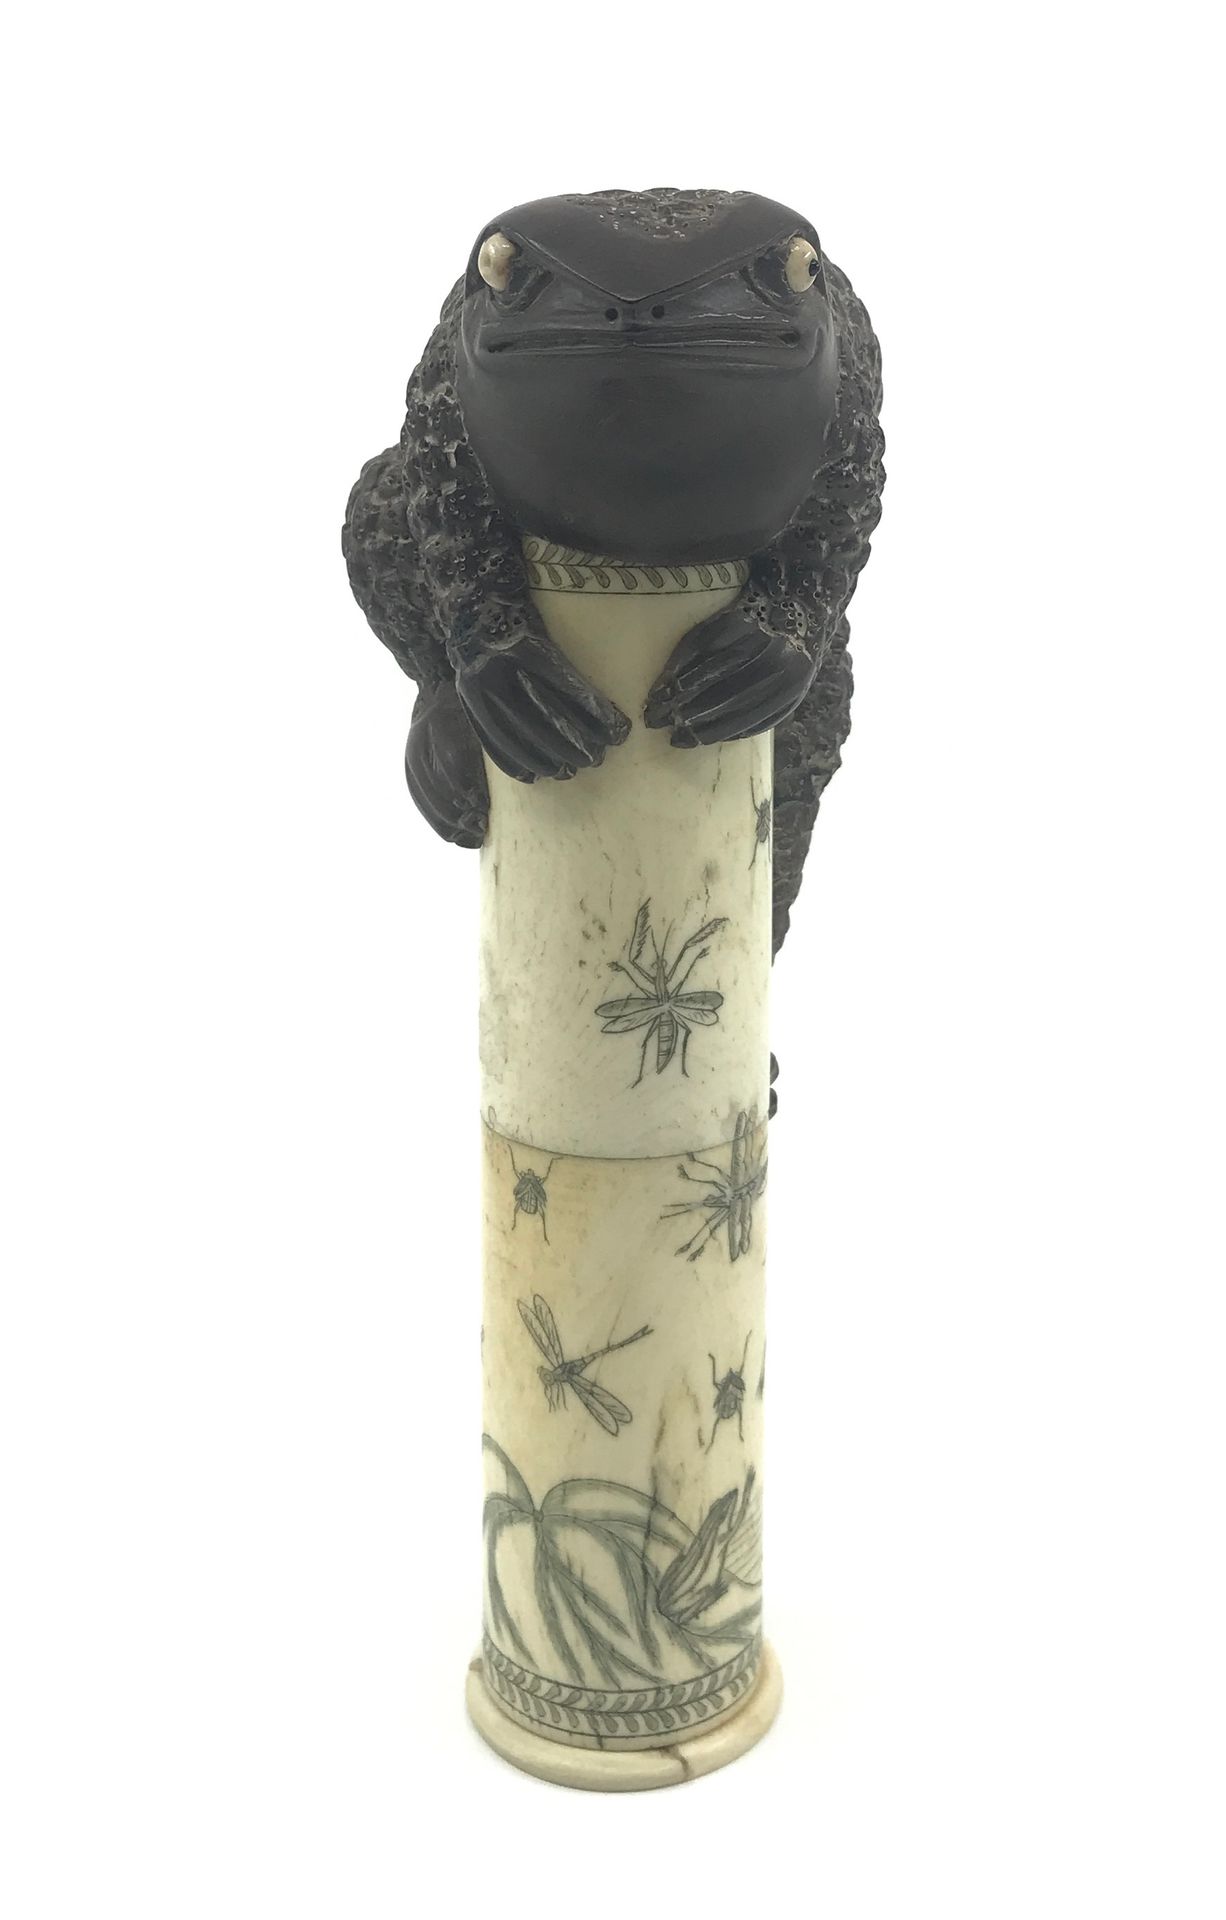 **CHINE - vers 1920 象牙雕刻的香筒，装饰有青蛙捕食昆虫和蜻蜓的图案，顶部是雕刻的青蛙。

底座下有铭文。

H.18厘米AS